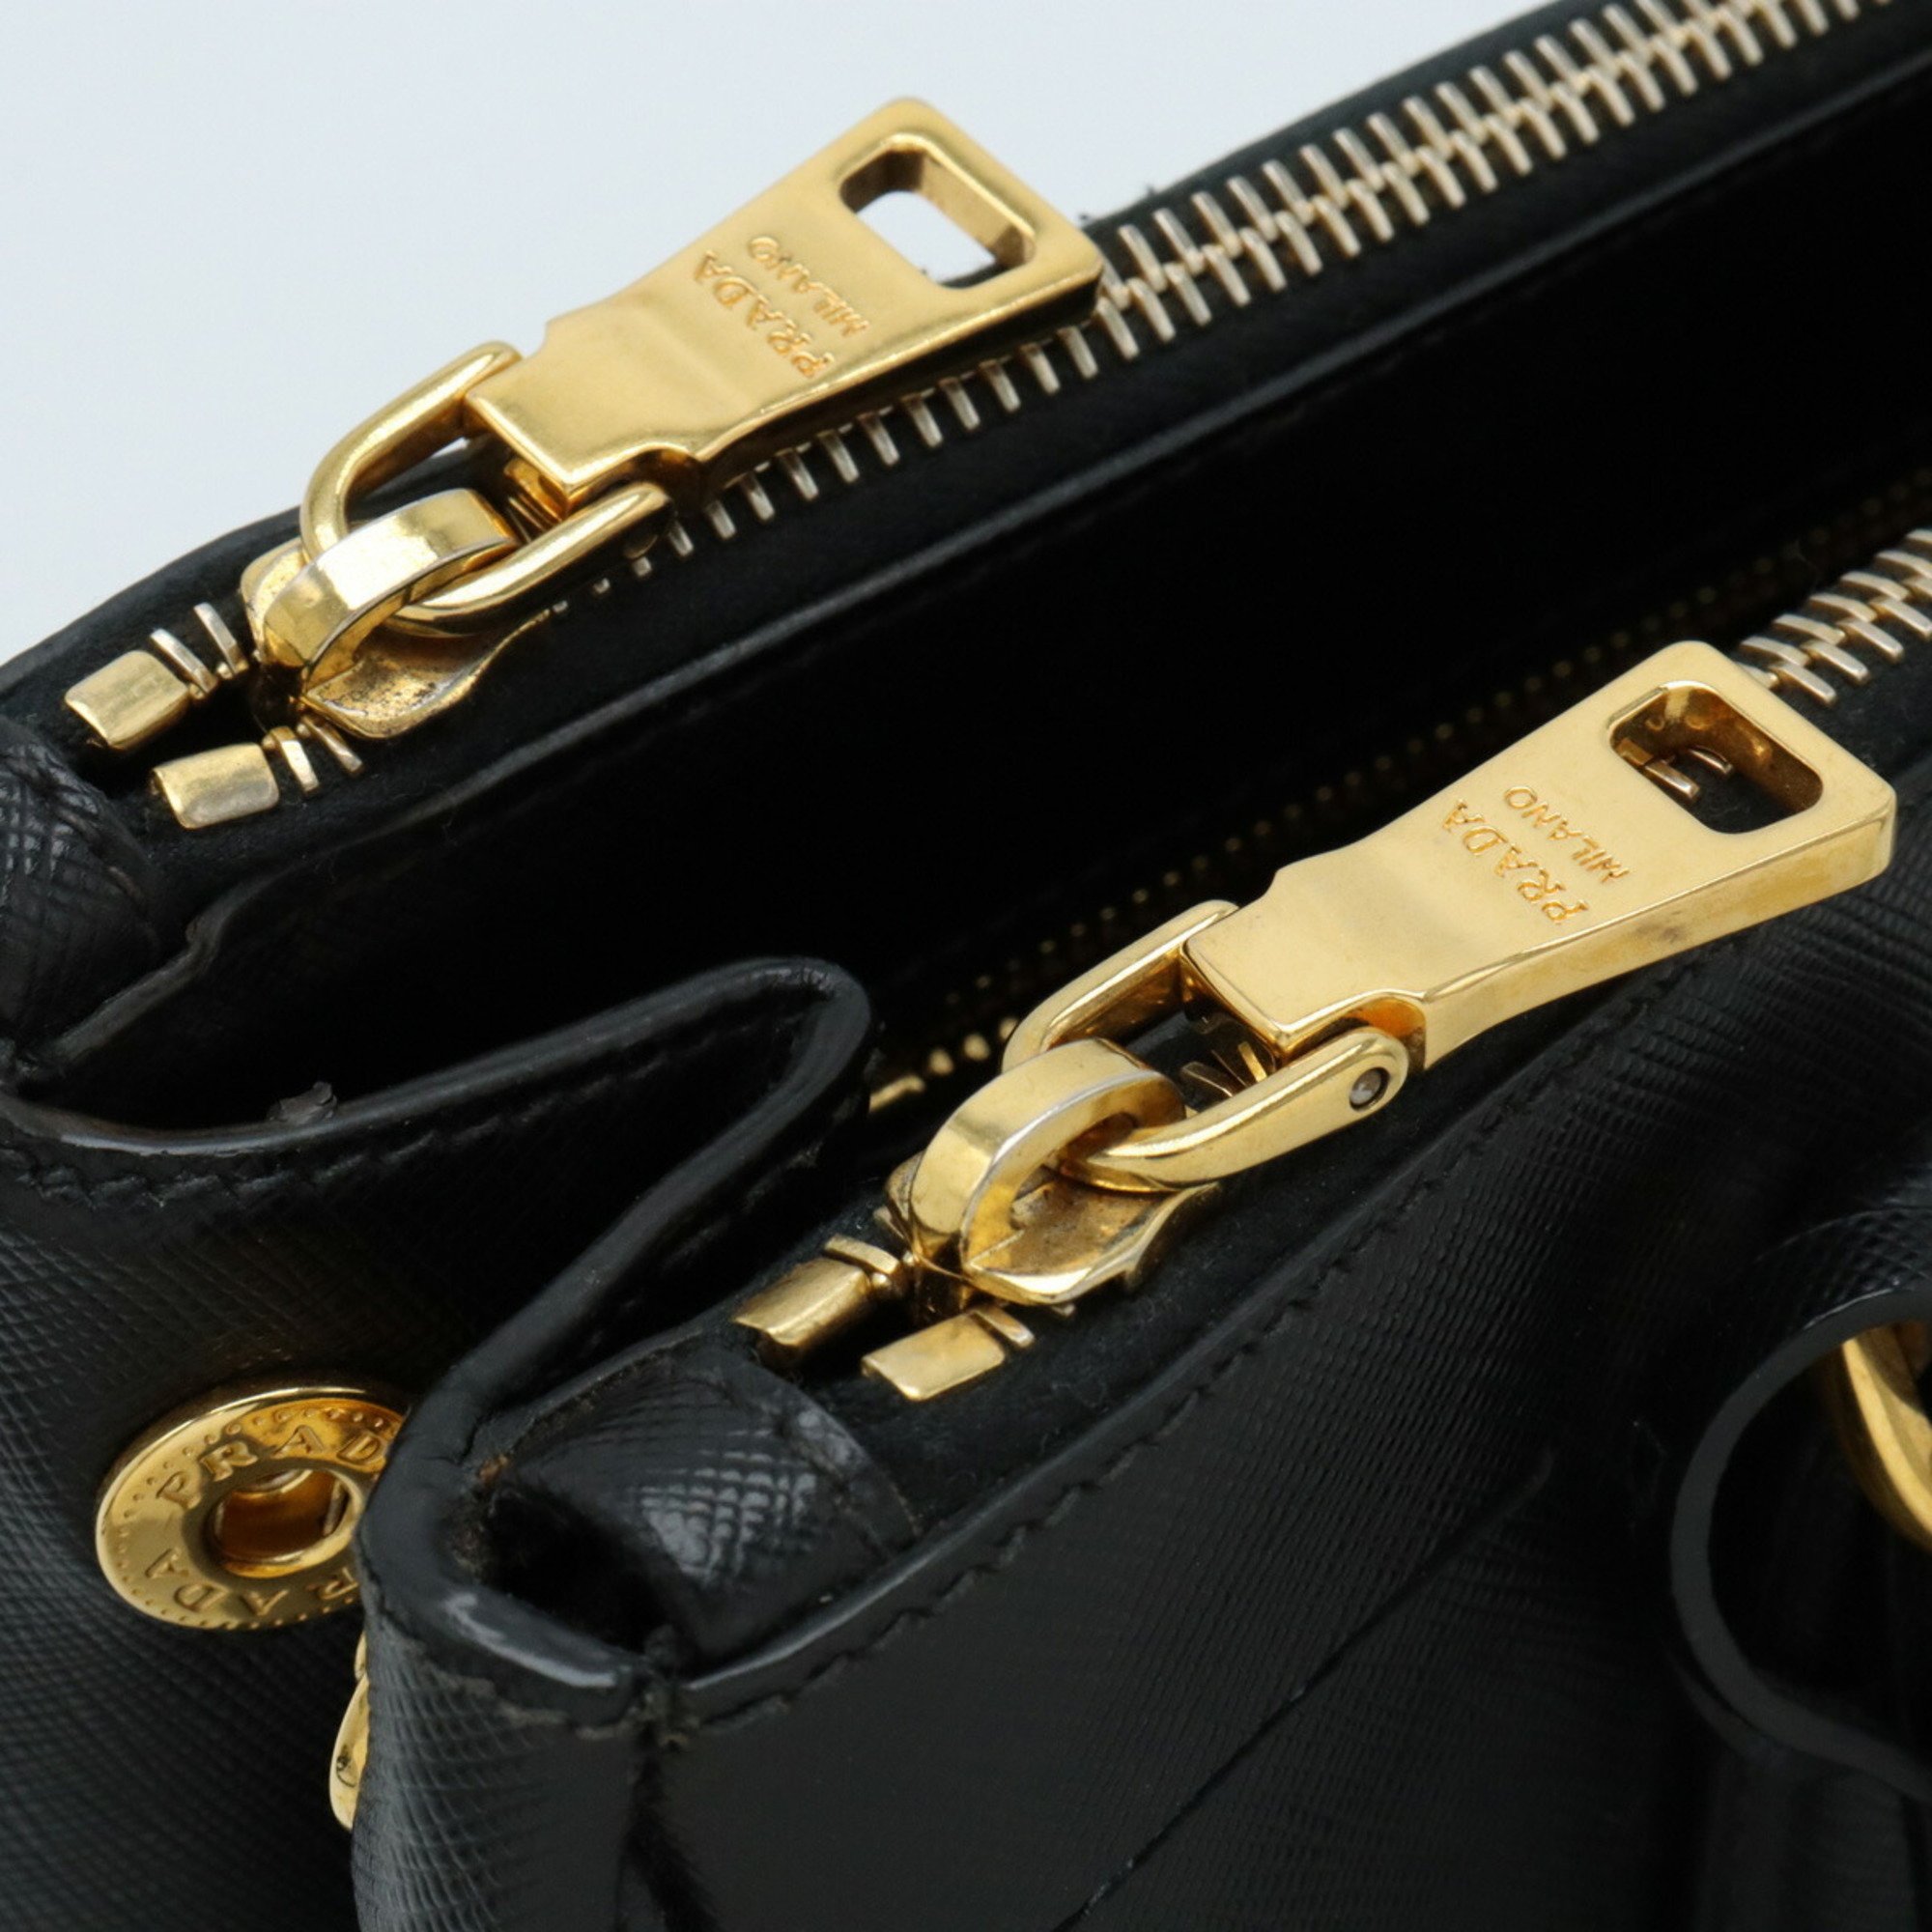 PRADA SAFFIANO LUX Saffiano Galleria handbag shoulder bag leather NERO black BN1801